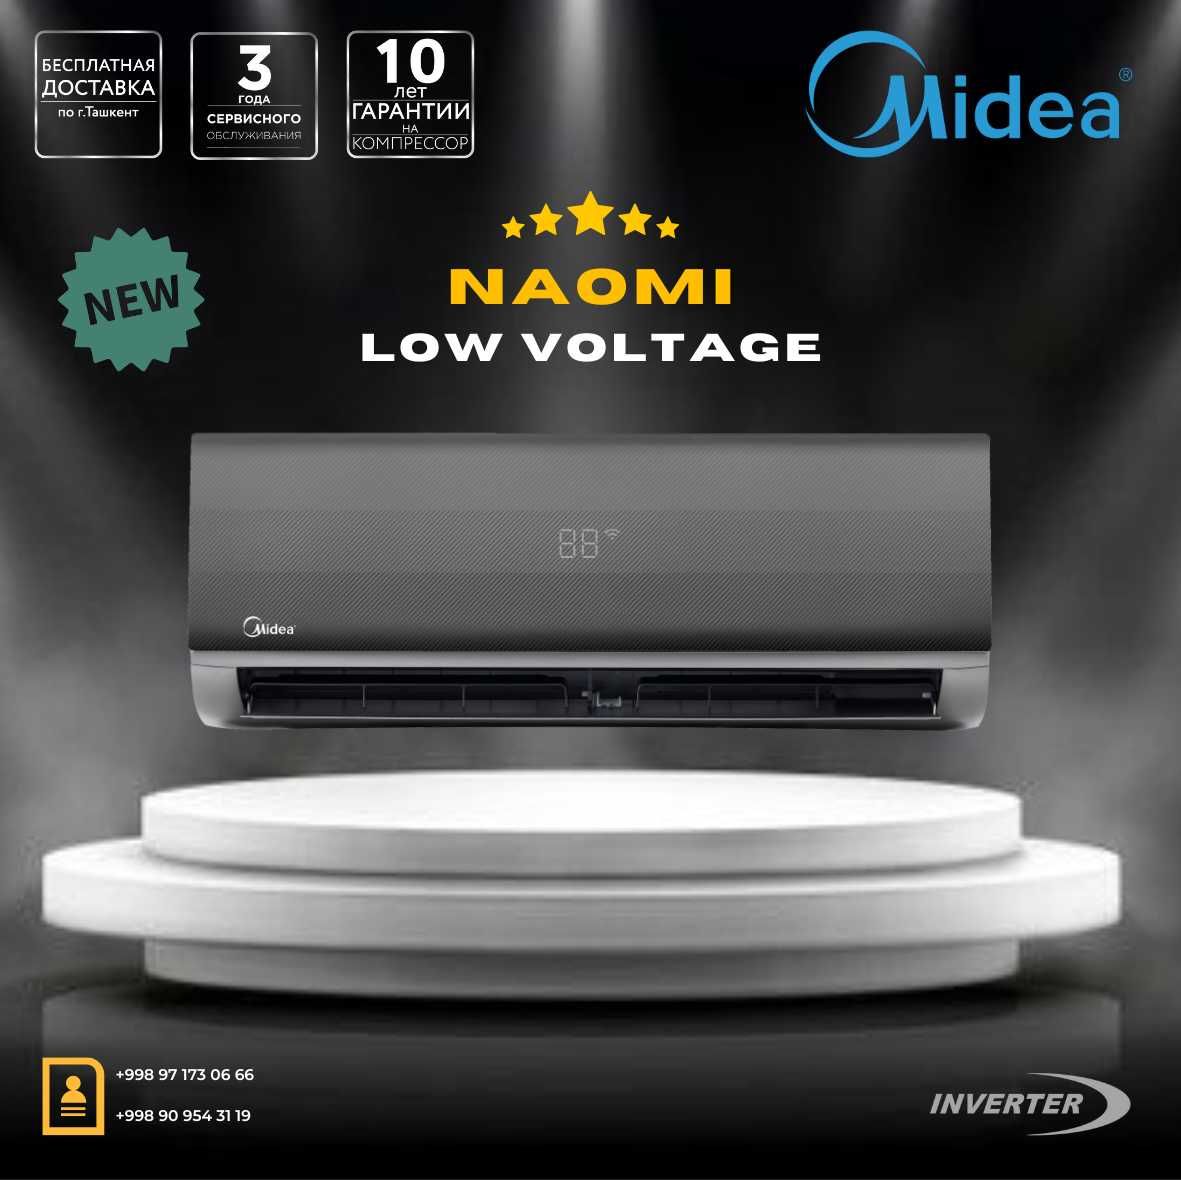 Новинка компании Midea - Naomi | Low Voltage | Inverter | 24 000 btu |